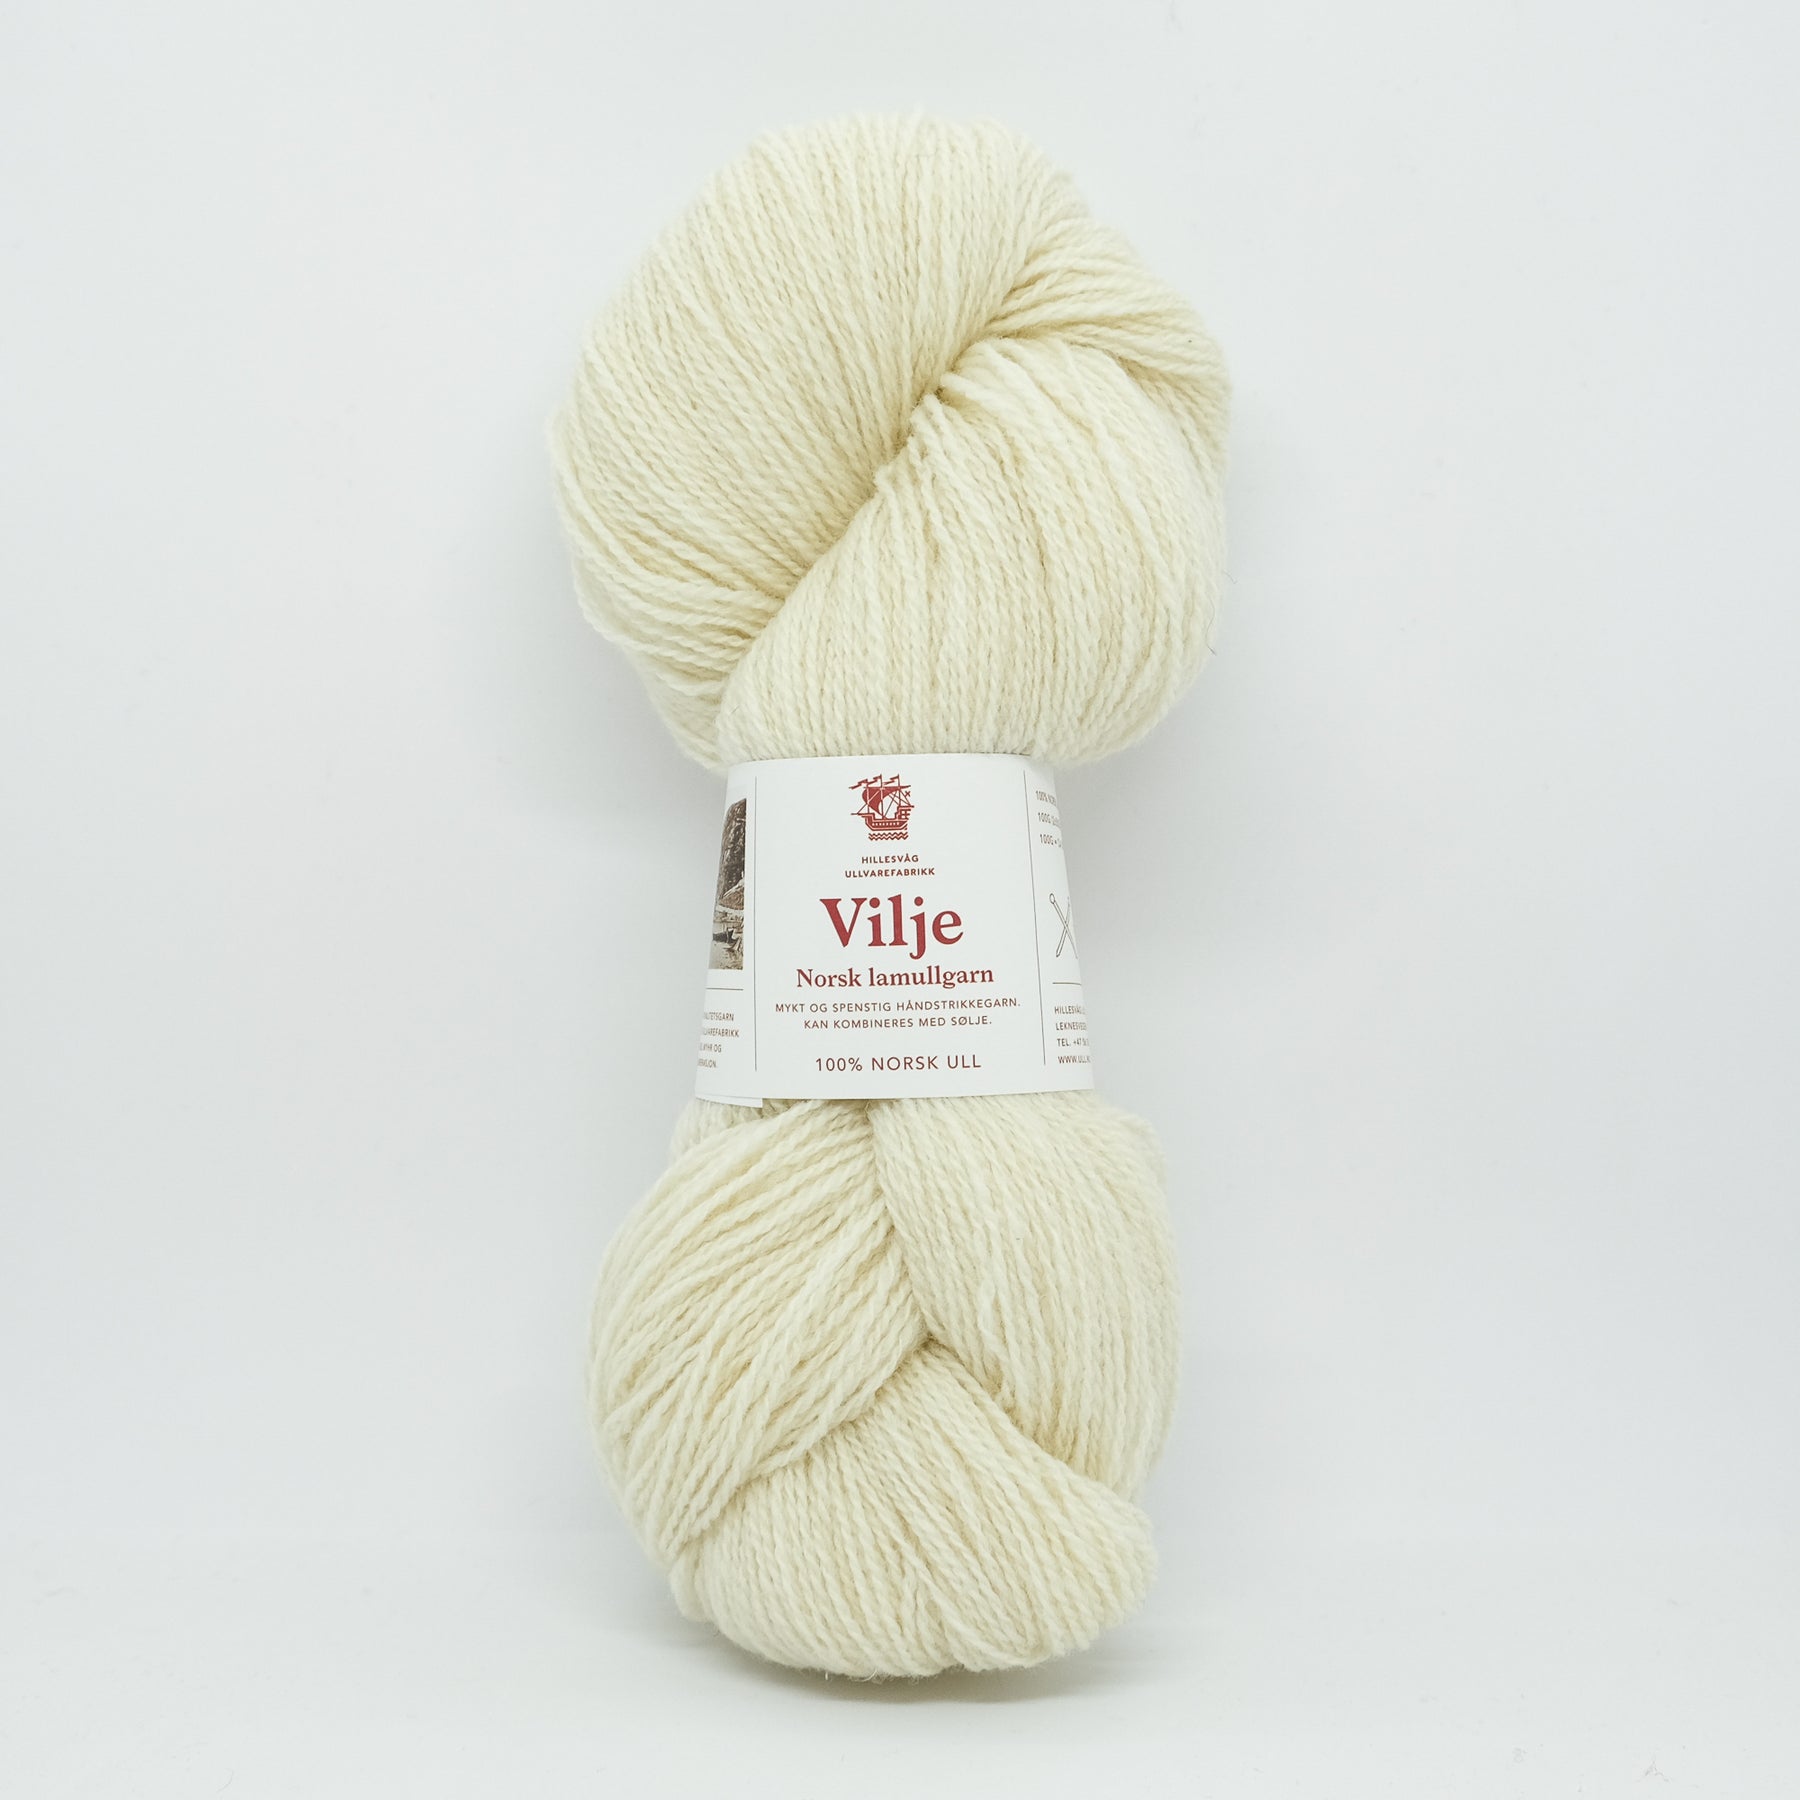 Vilje - Unbleached white